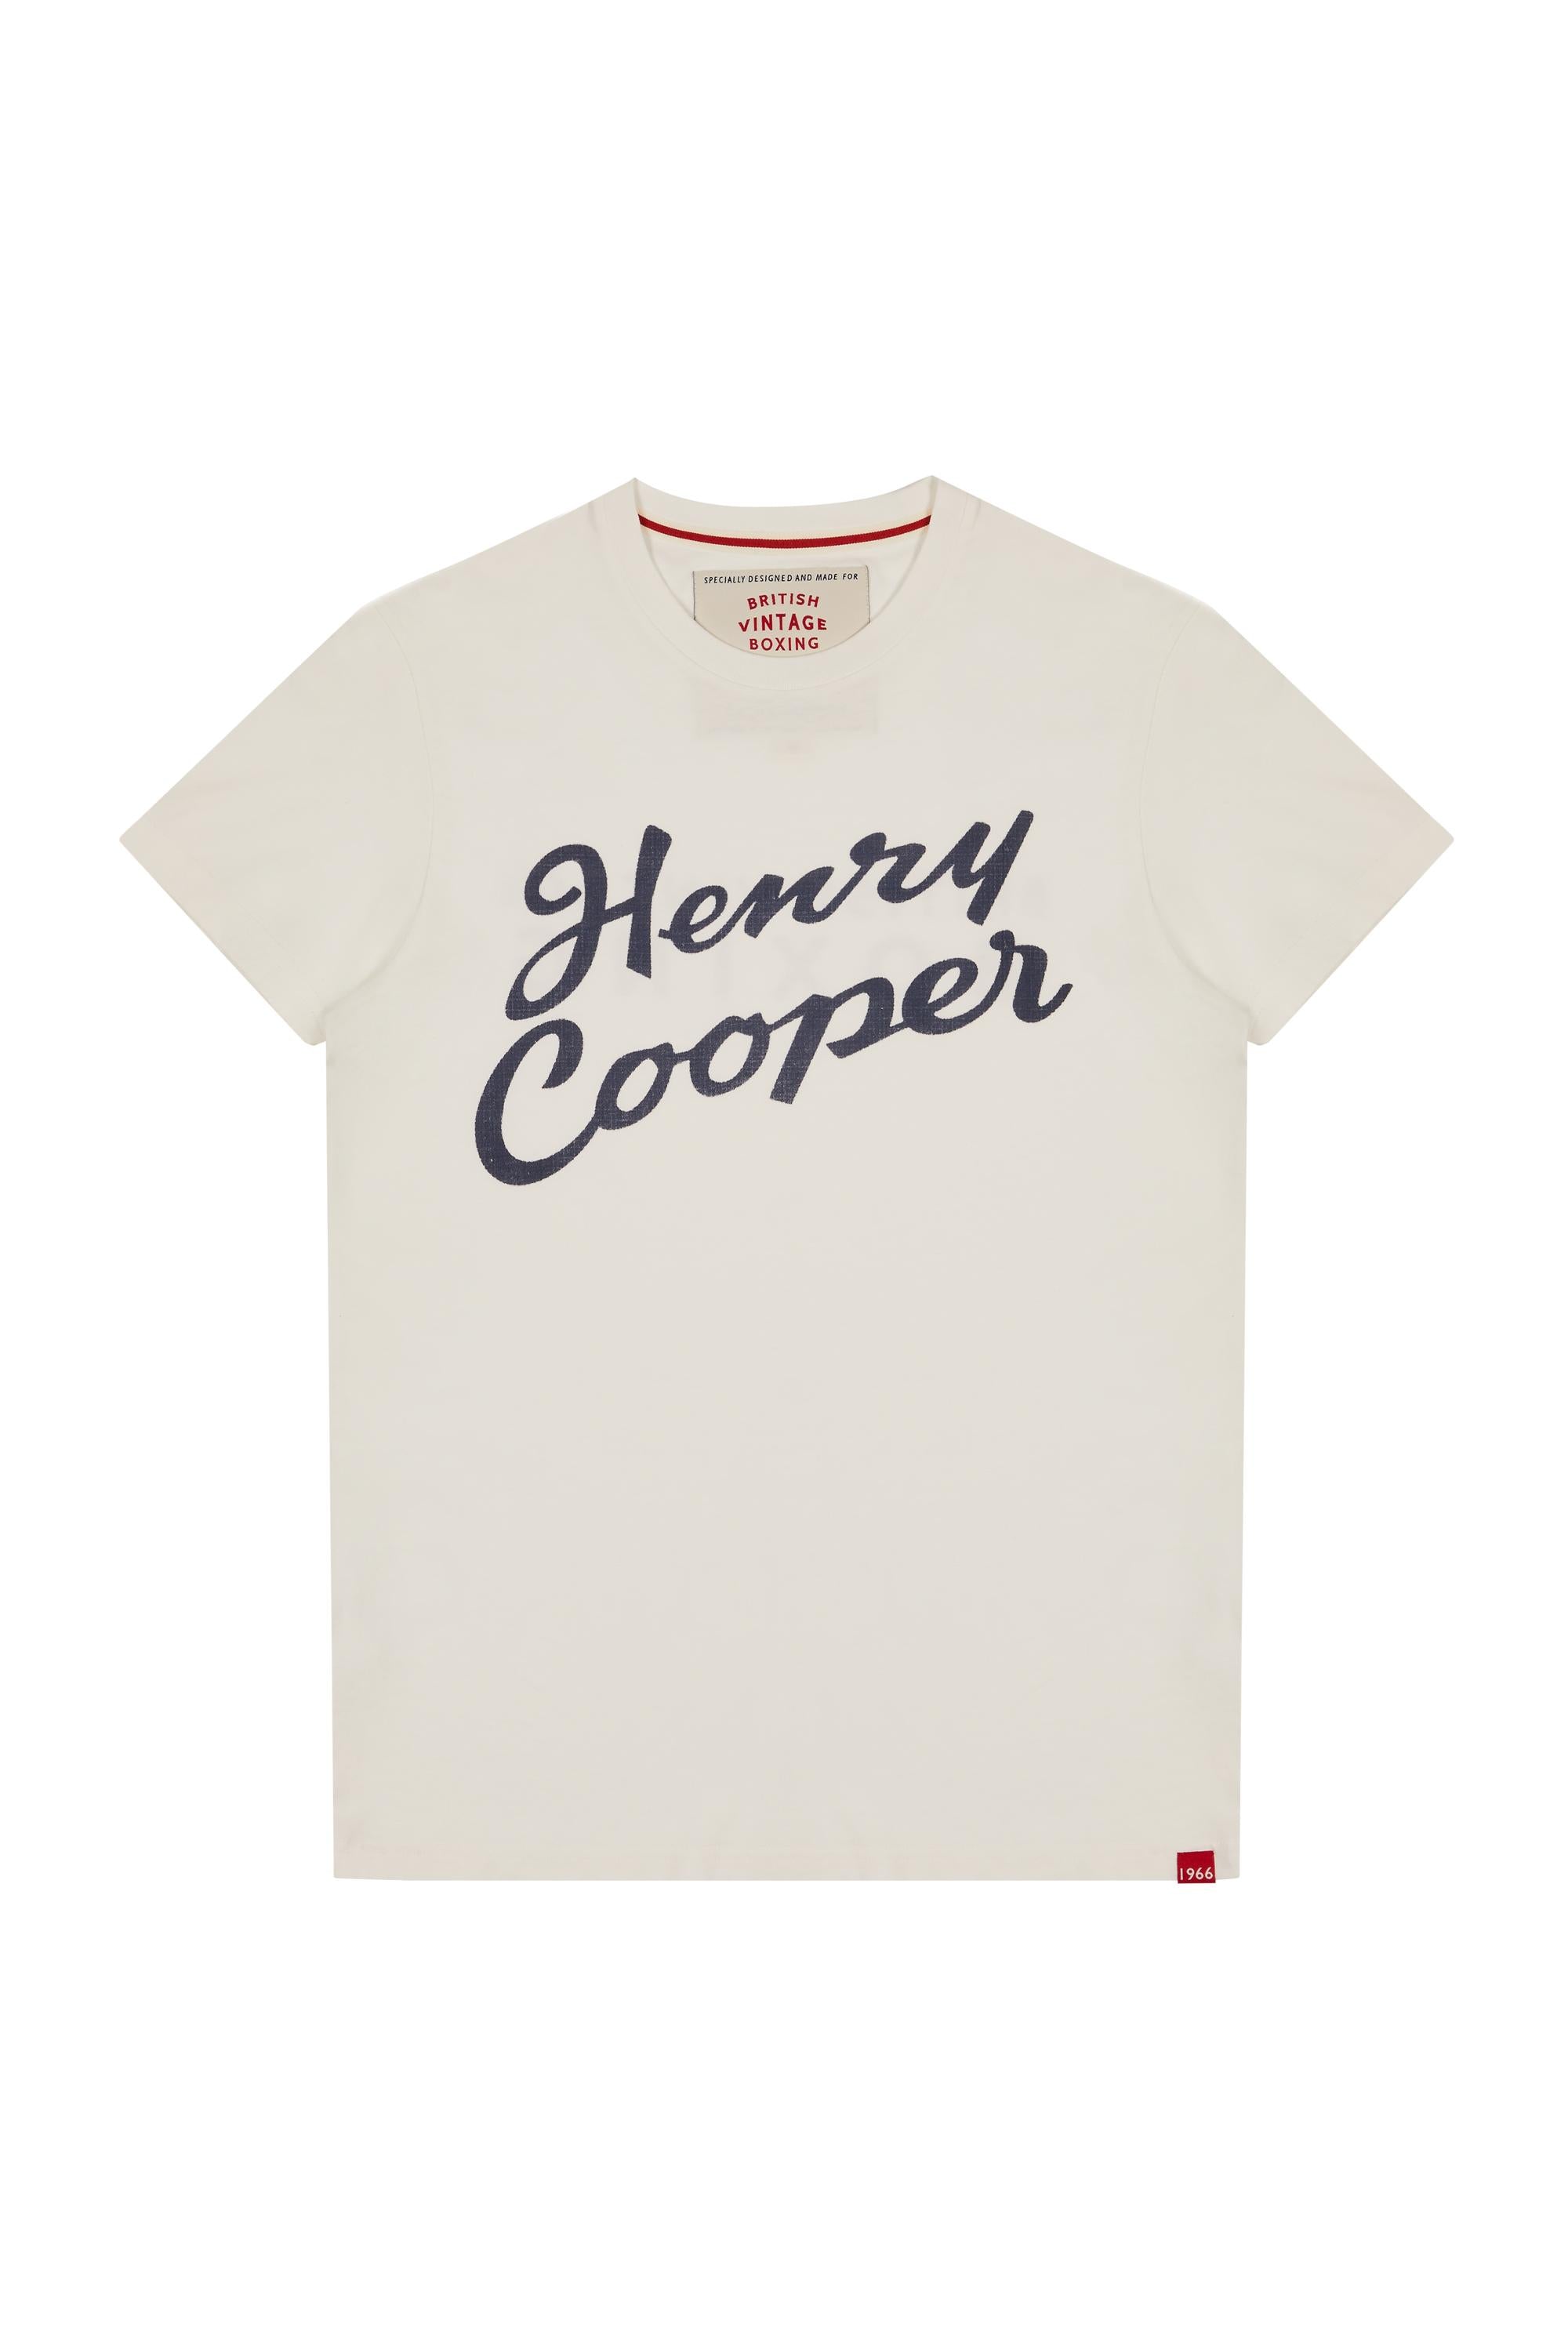 HENRY COOPER 1966 LIGHT-WEIGHT TRAINING CAMP T-SHIRT